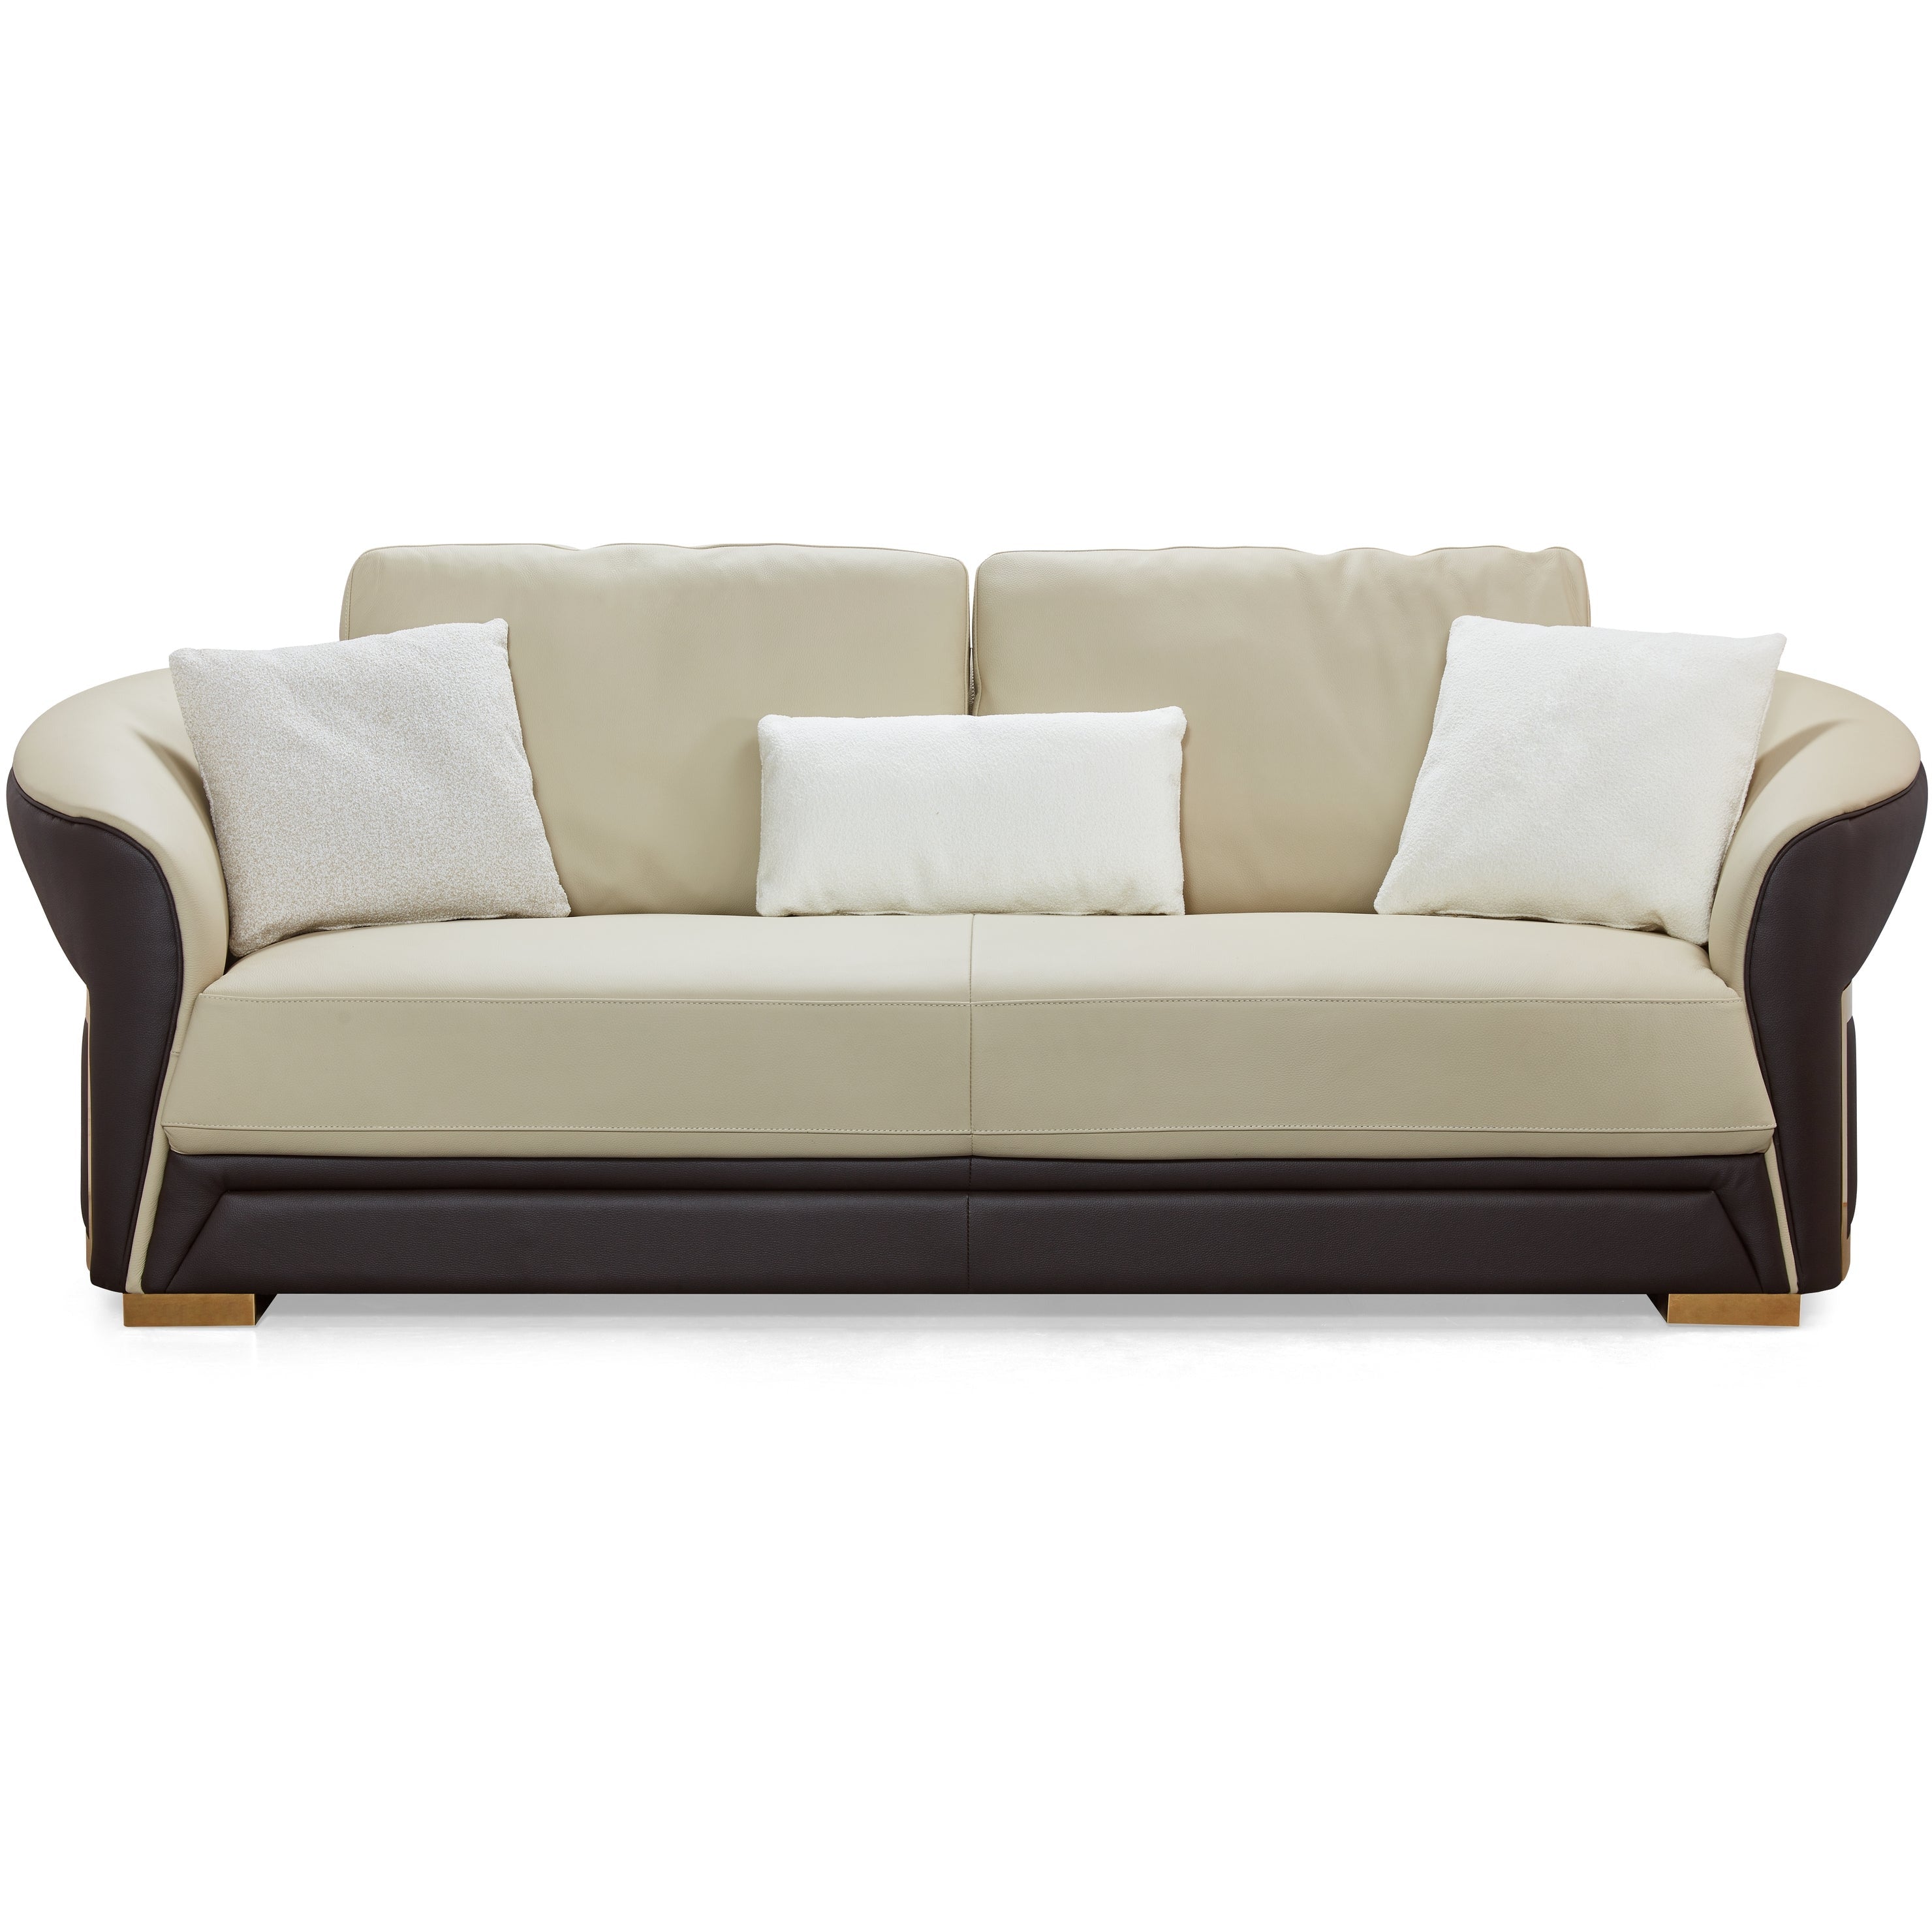 European Furniture - Celine 3 Piece Sofa Set Italian Leather Beige & Chocolate - EF-89951 - New Star Living